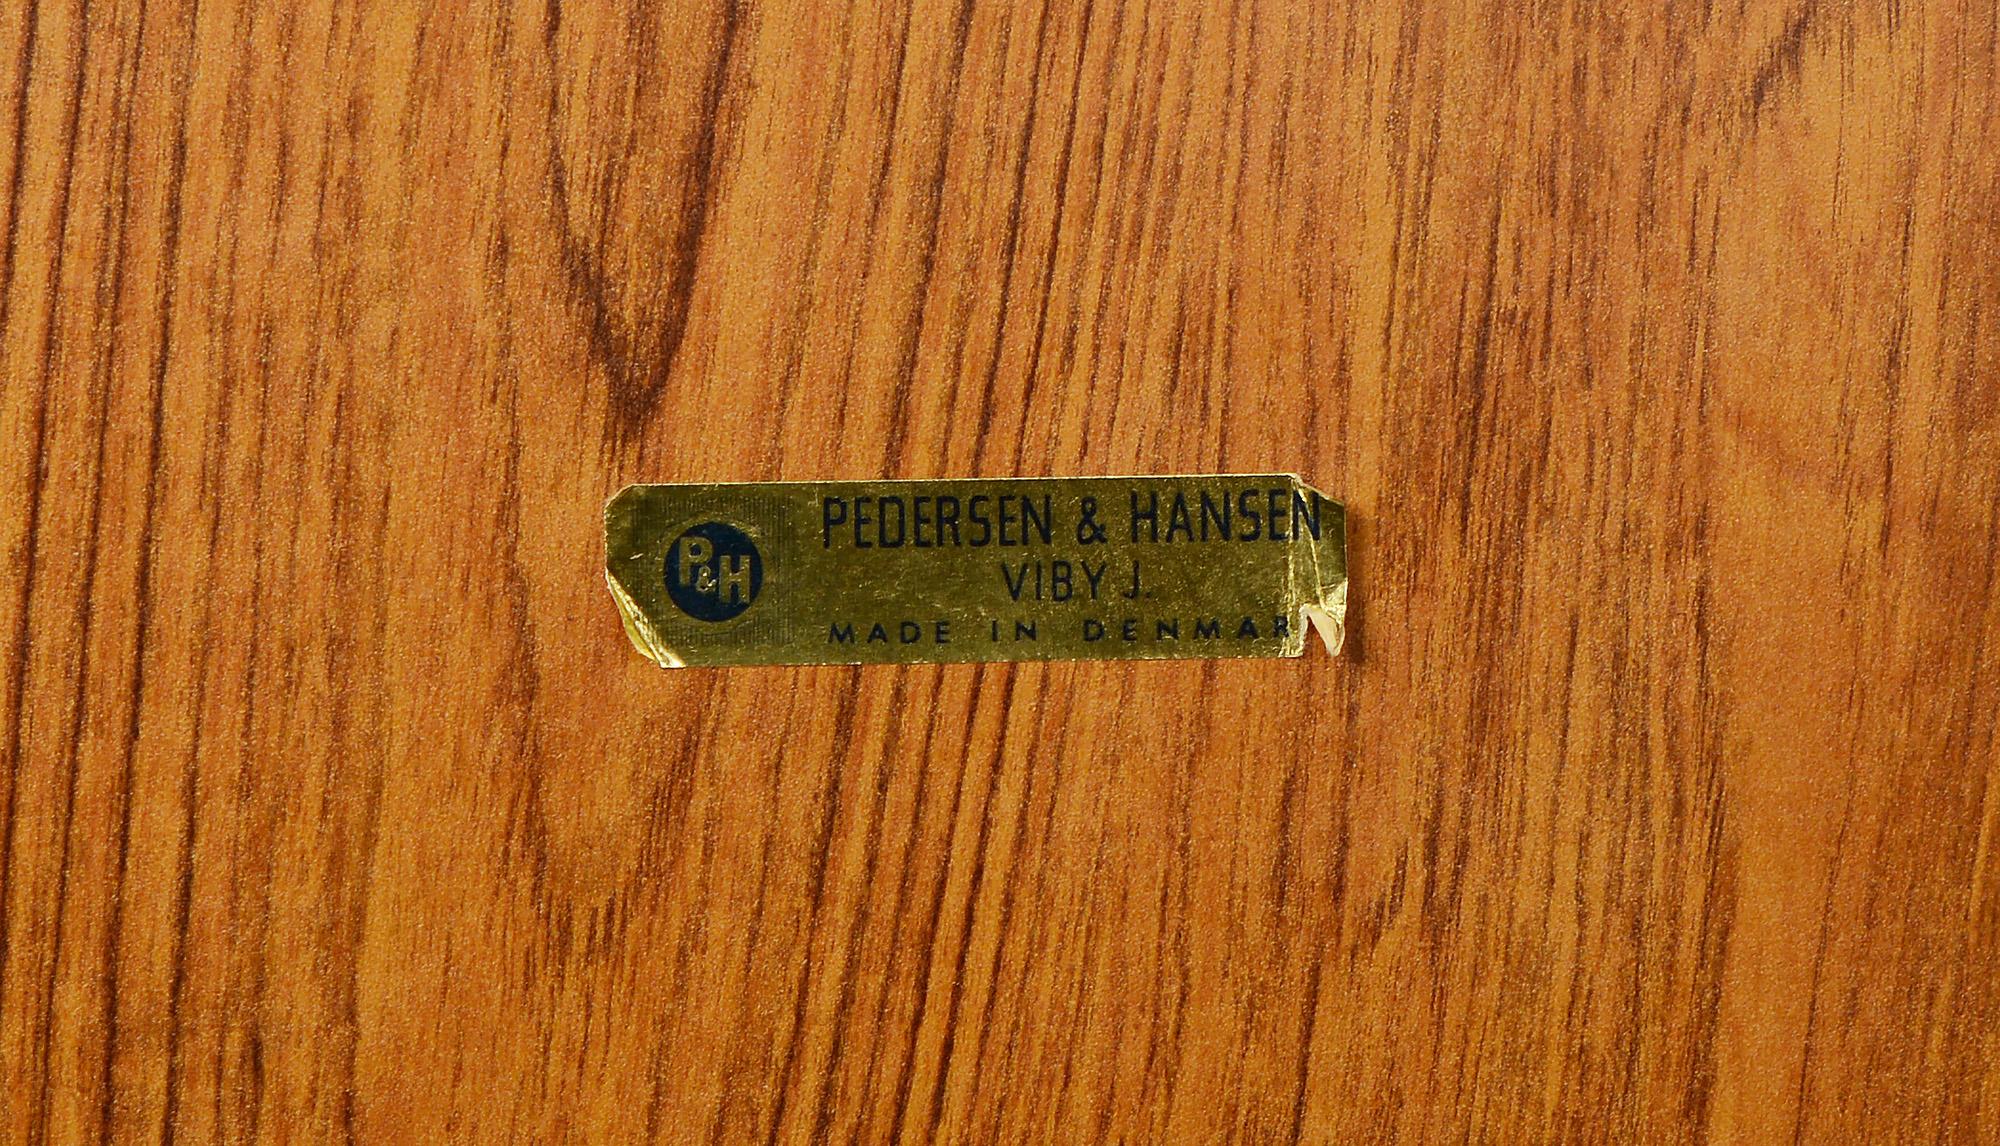 Pedersen & Hansen Large Dresser or Table Top Teak Mirror For Sale 1